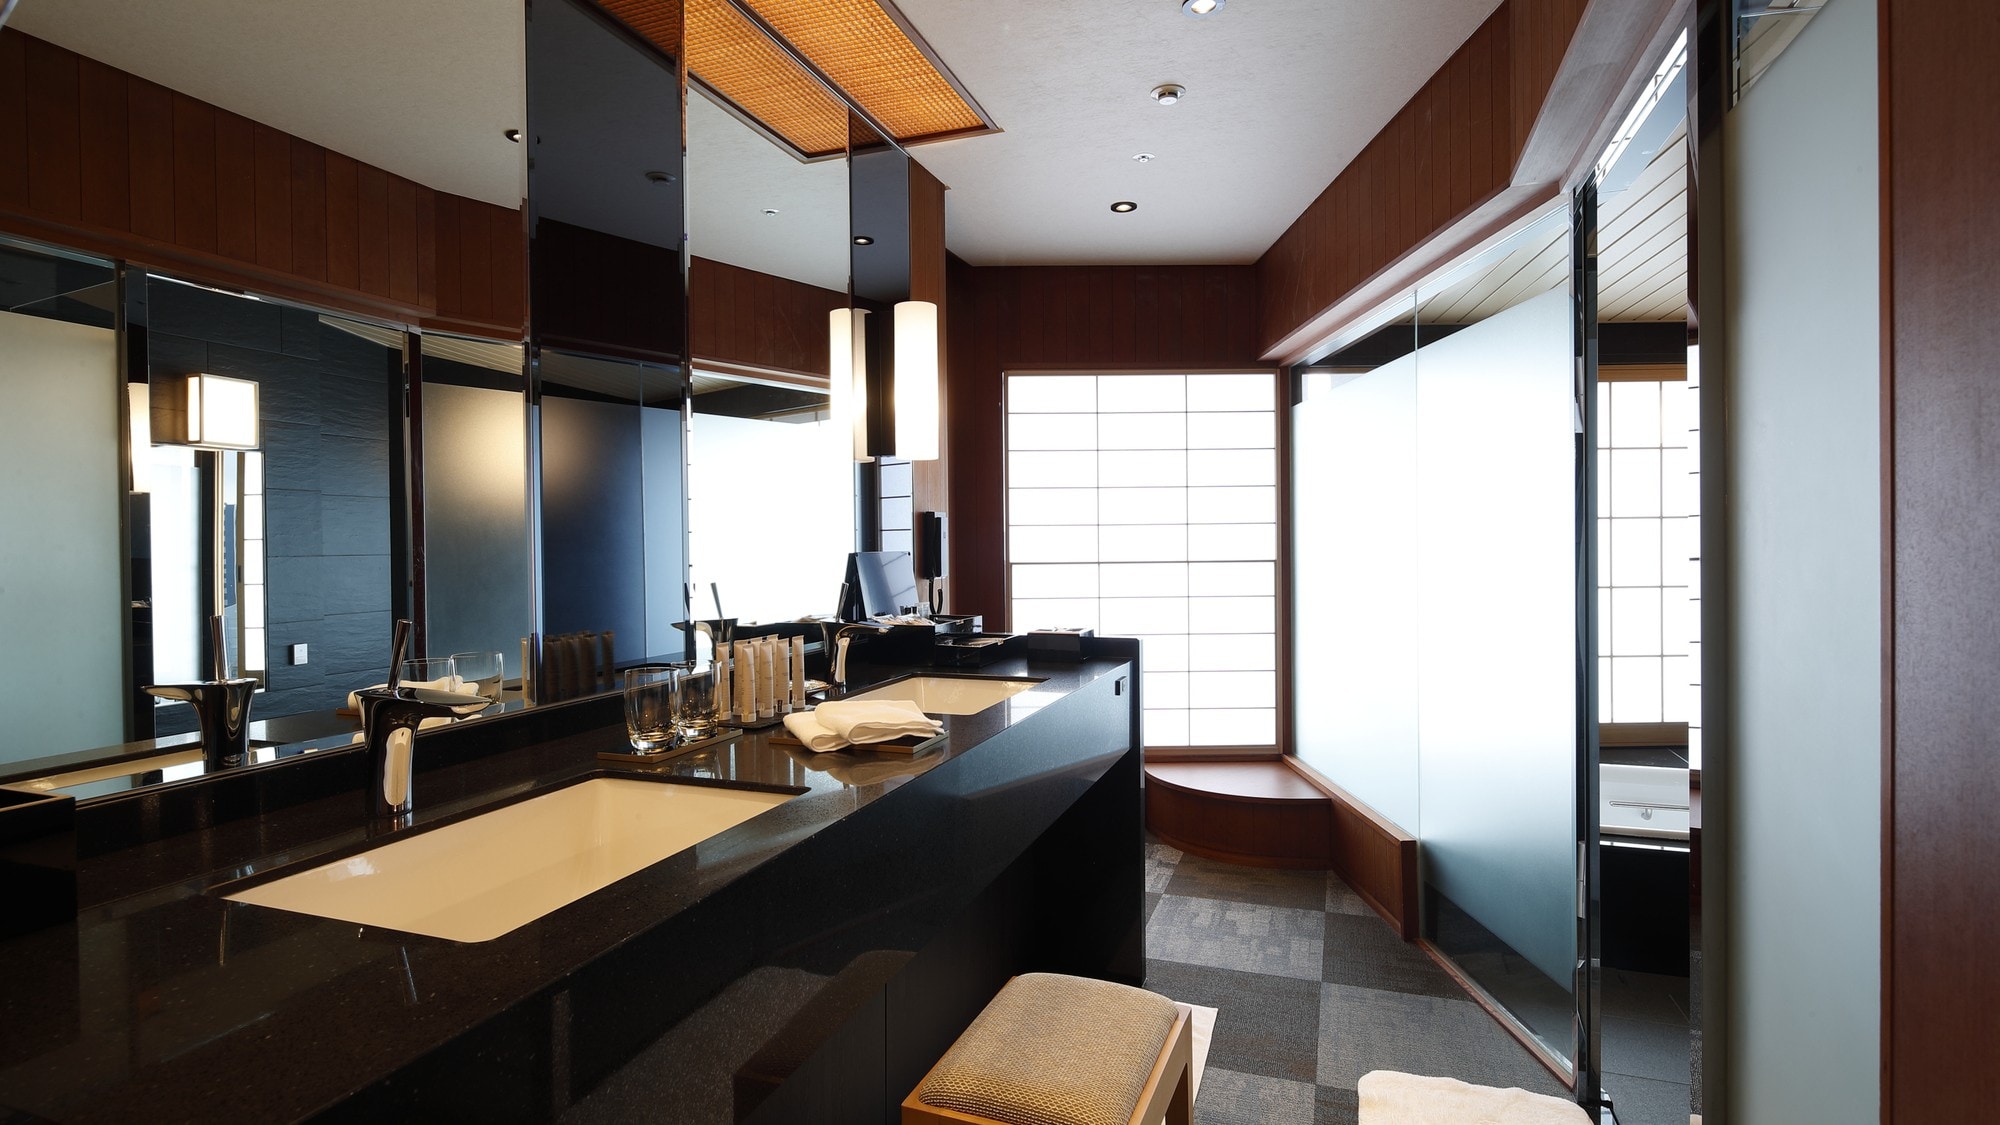 An example of a Japanese-style bathroom